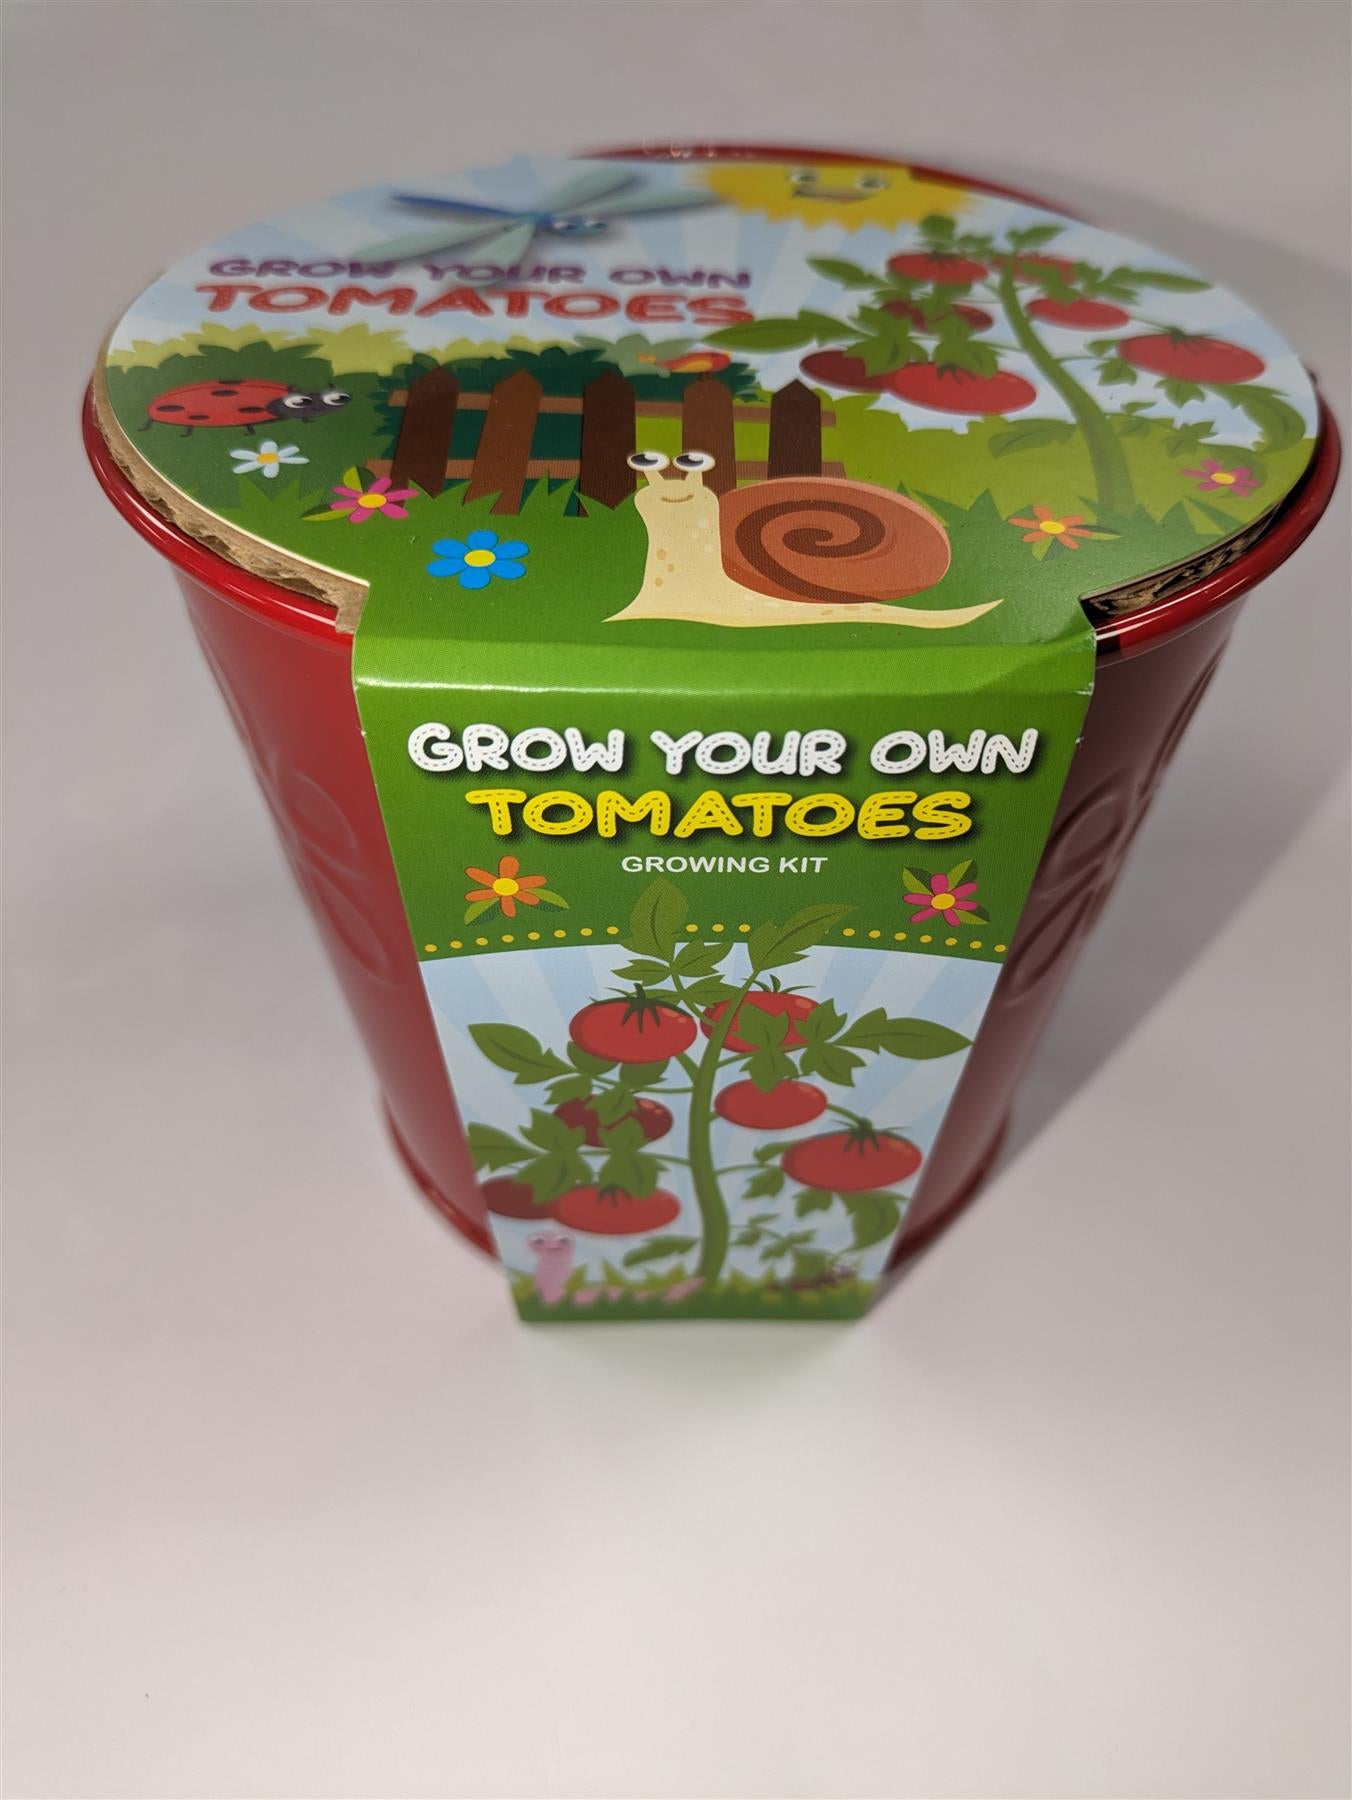 Taylors Bulbs GYO Kids Tomato Planter. Children's Gardening Gift. Seed & Compost Kit.